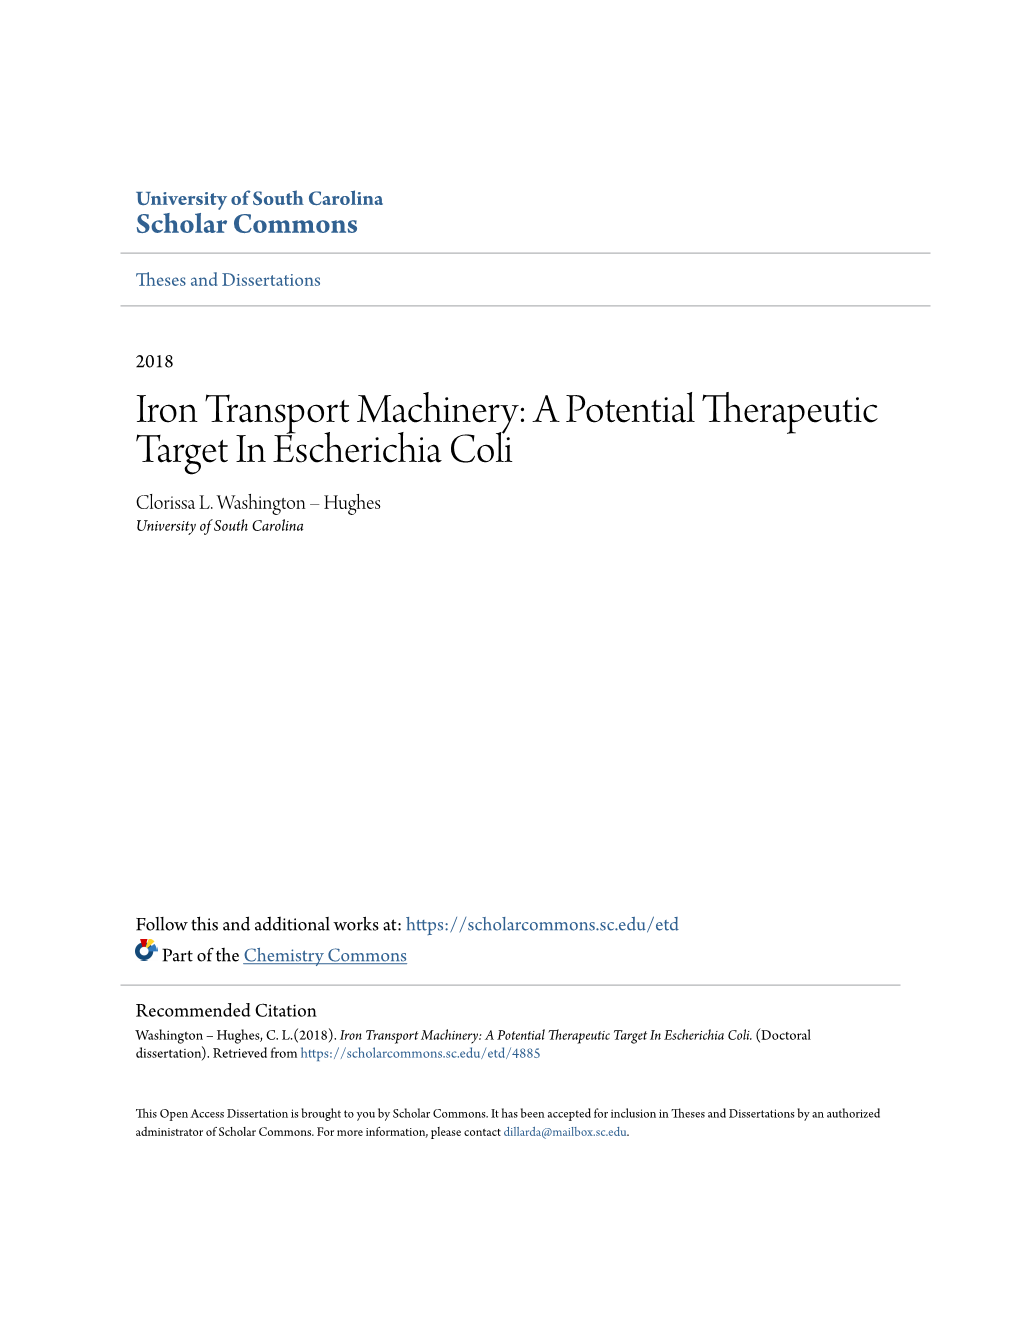 Iron Transport Machinery: a Potential Therapeutic Target in Escherichia Coli Clorissa L